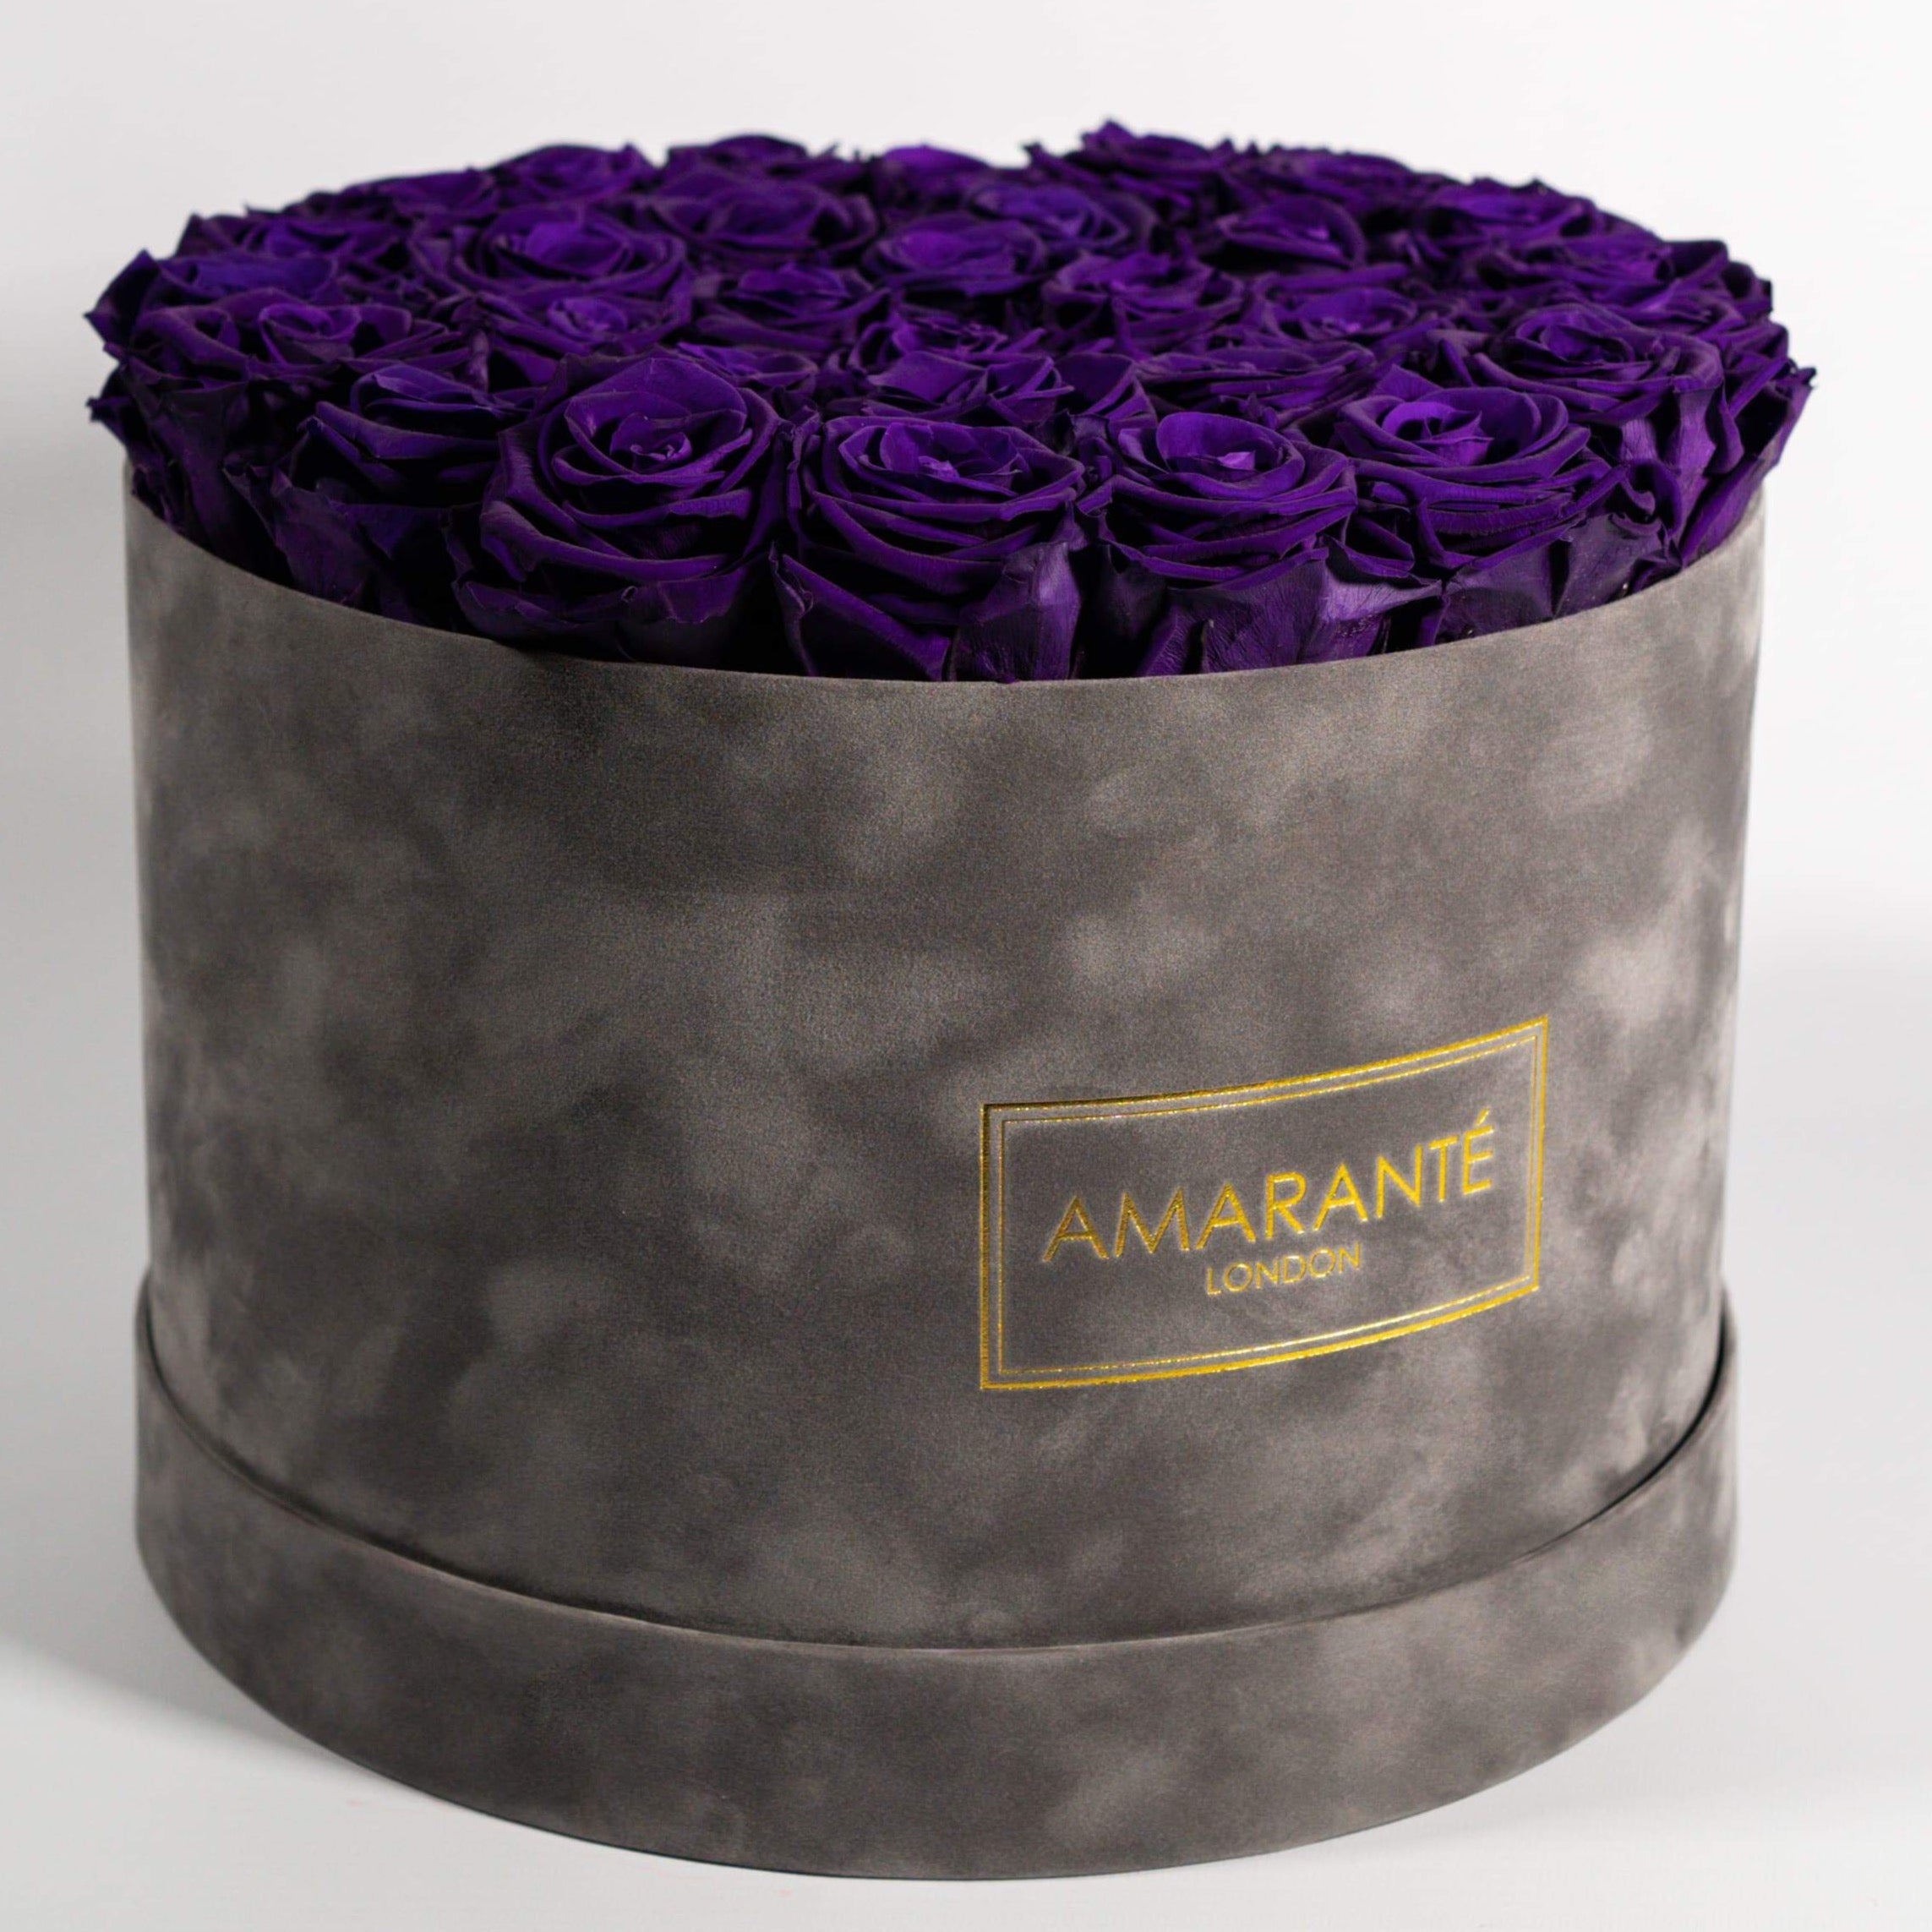 Cherished dark purple Roses in a dapper grey box, expressing luxury and magic. 